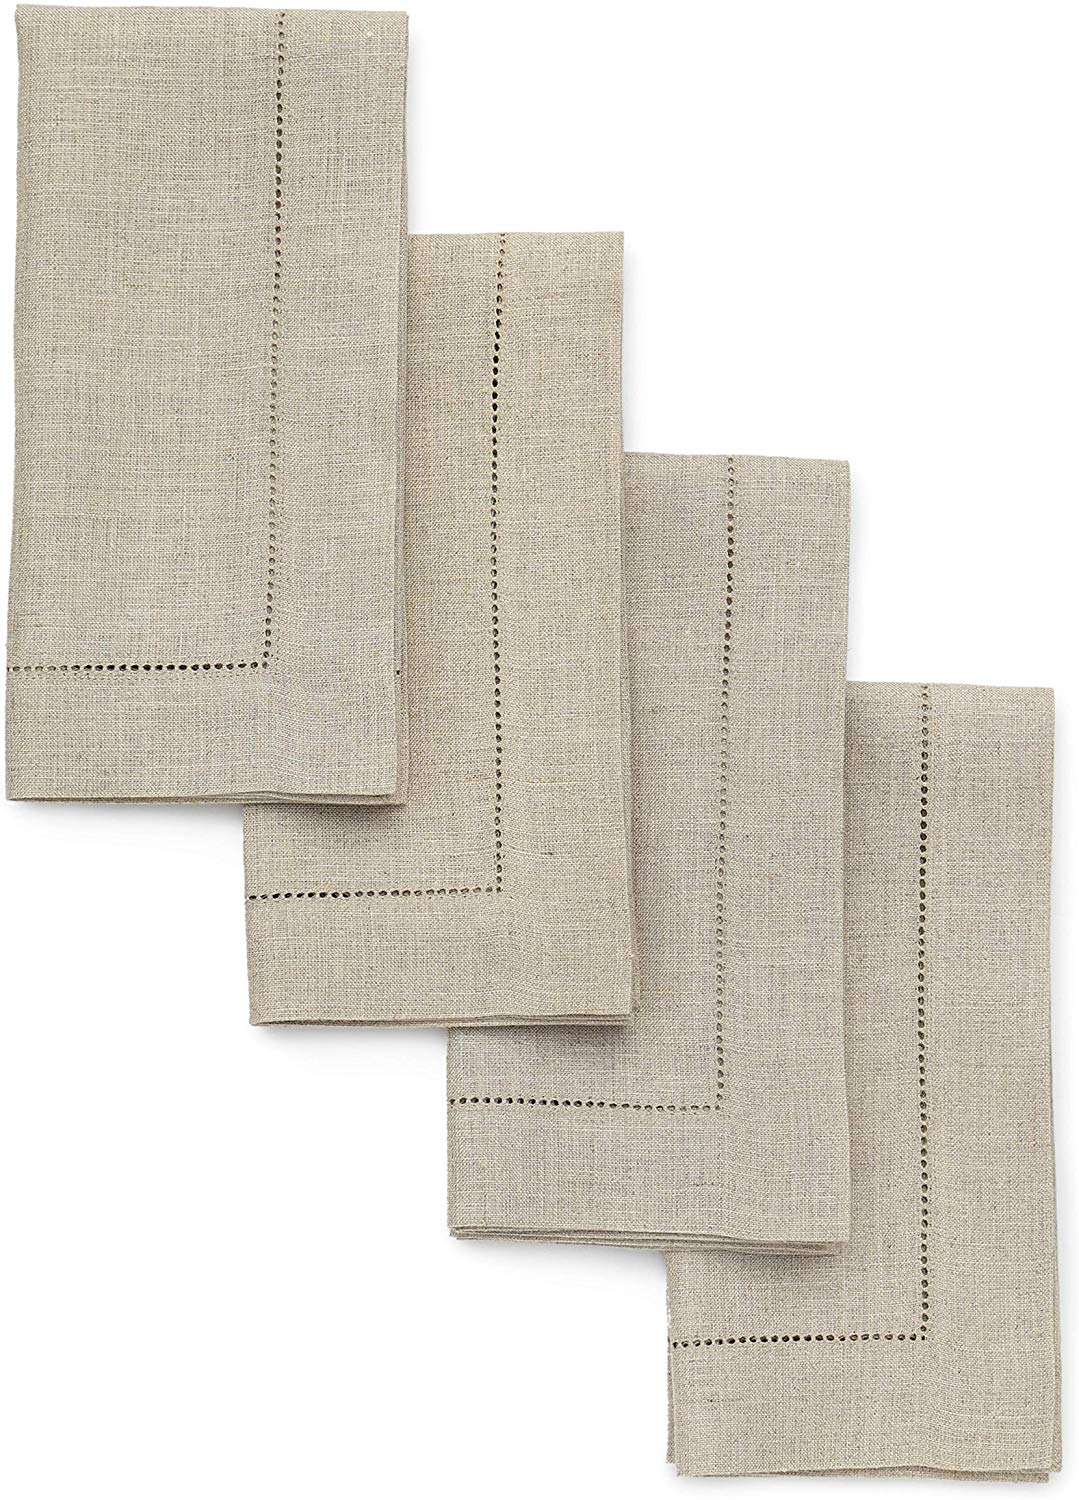 https://www.dontwasteyourmoney.com/wp-content/uploads/2019/11/solino-home-hemstitch-linen-napkins-linen-napkin.jpg